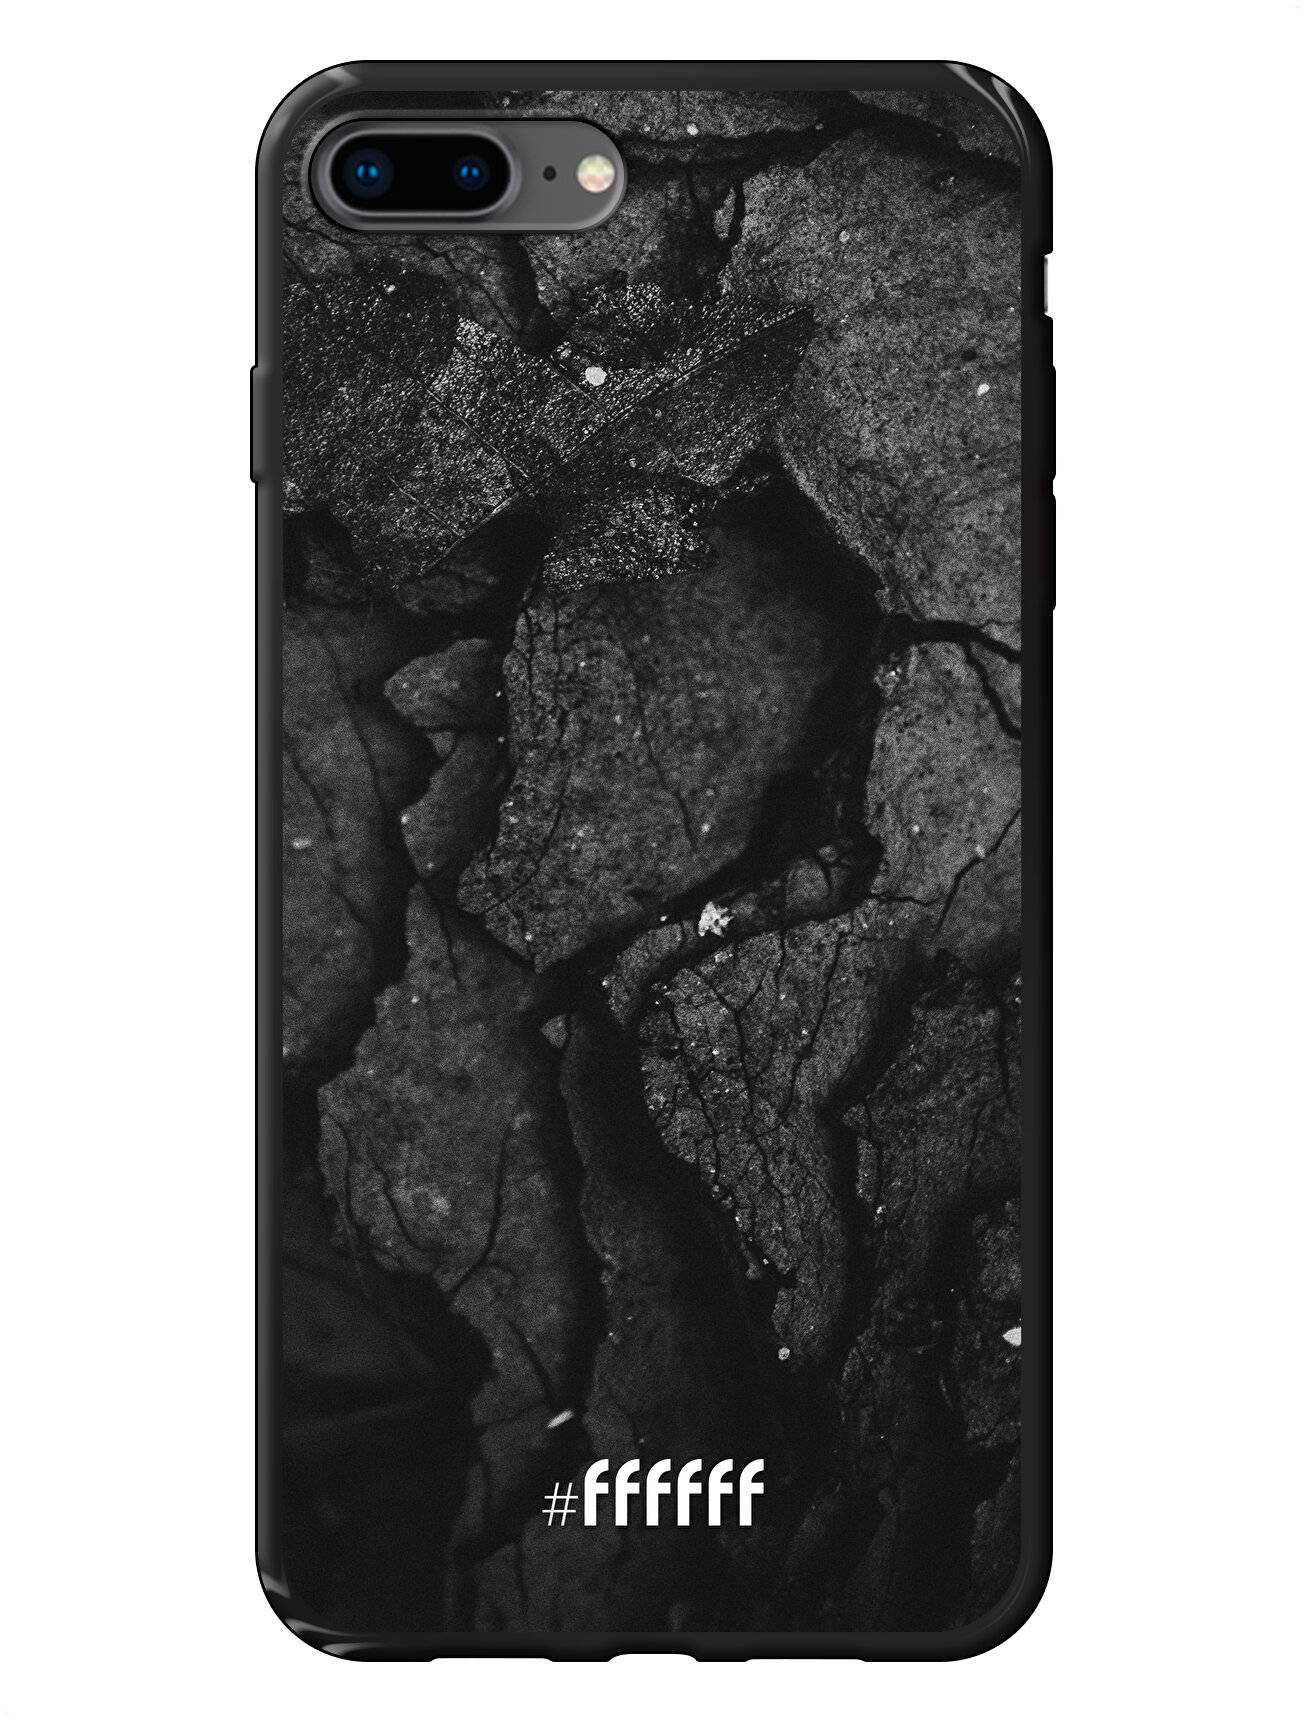 Dark Rock Formation iPhone 7 Plus